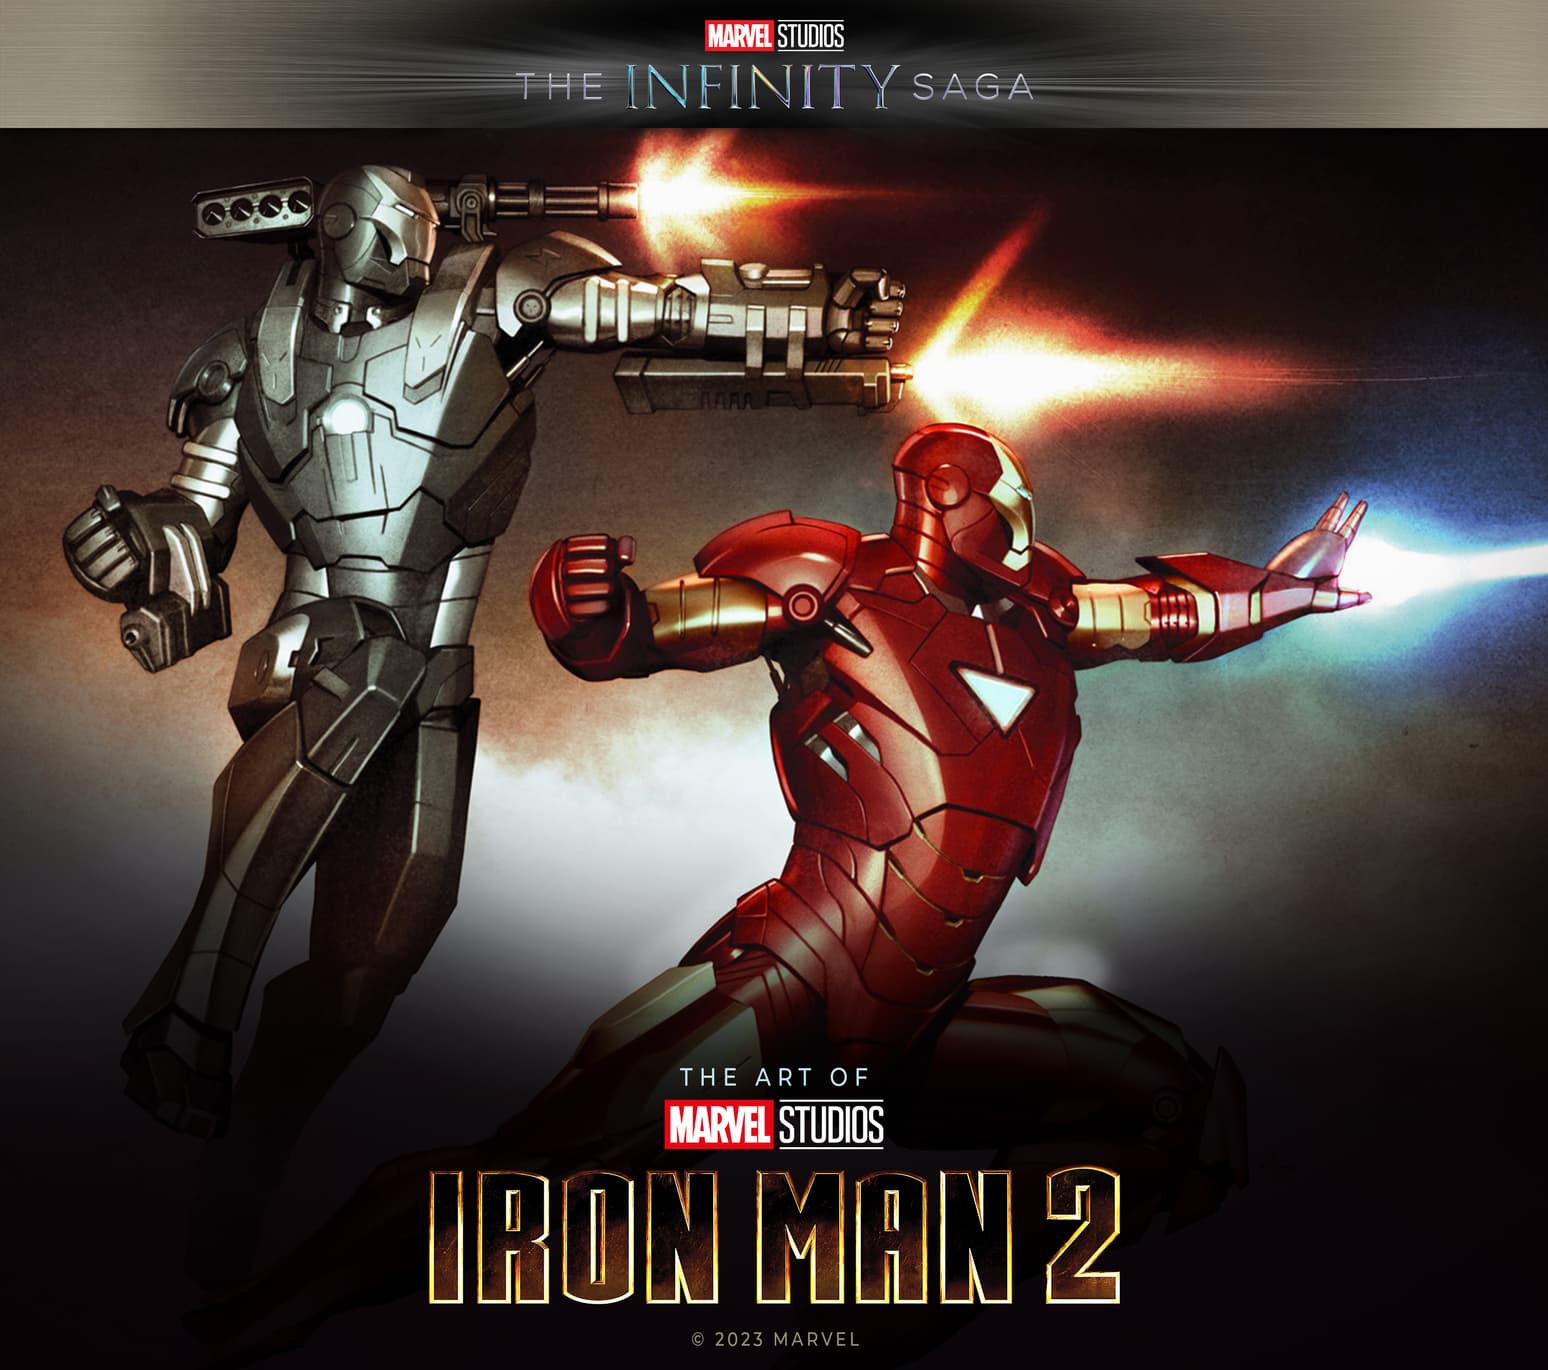 'Marvel Studios' The Infinity Saga – Iron Man 2: The Art of the Movie' cover